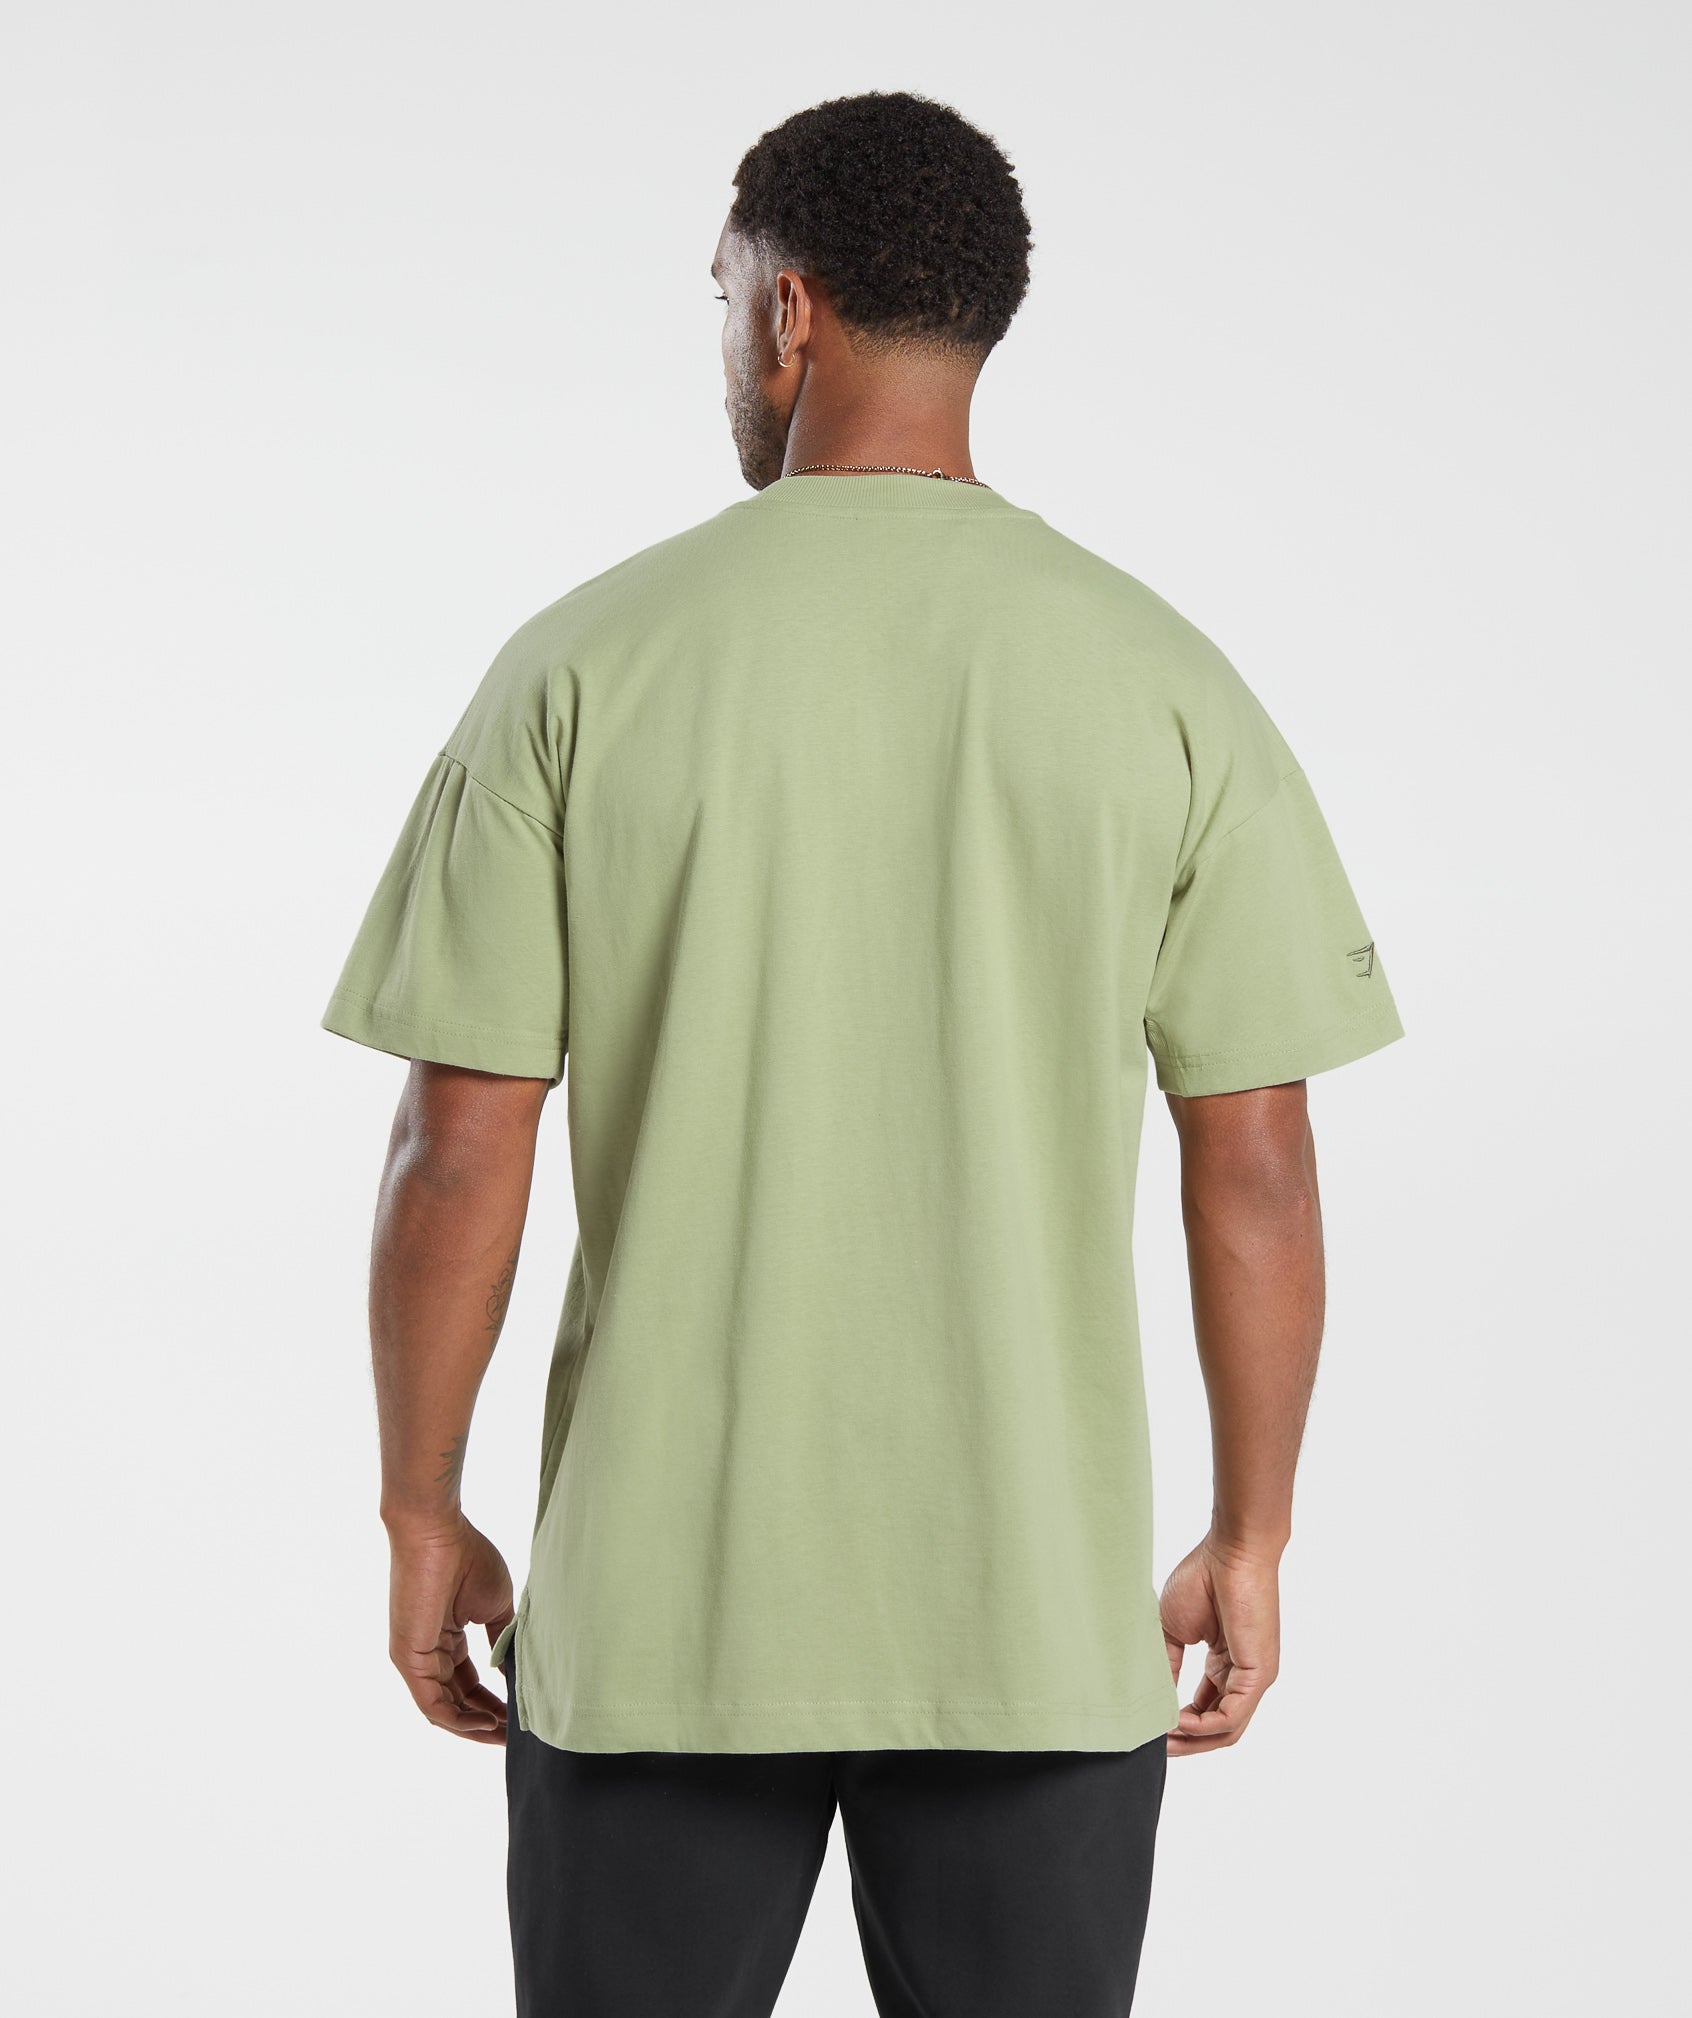 Rest Day Essentials T-Shirt in Light Sage Green - view 2